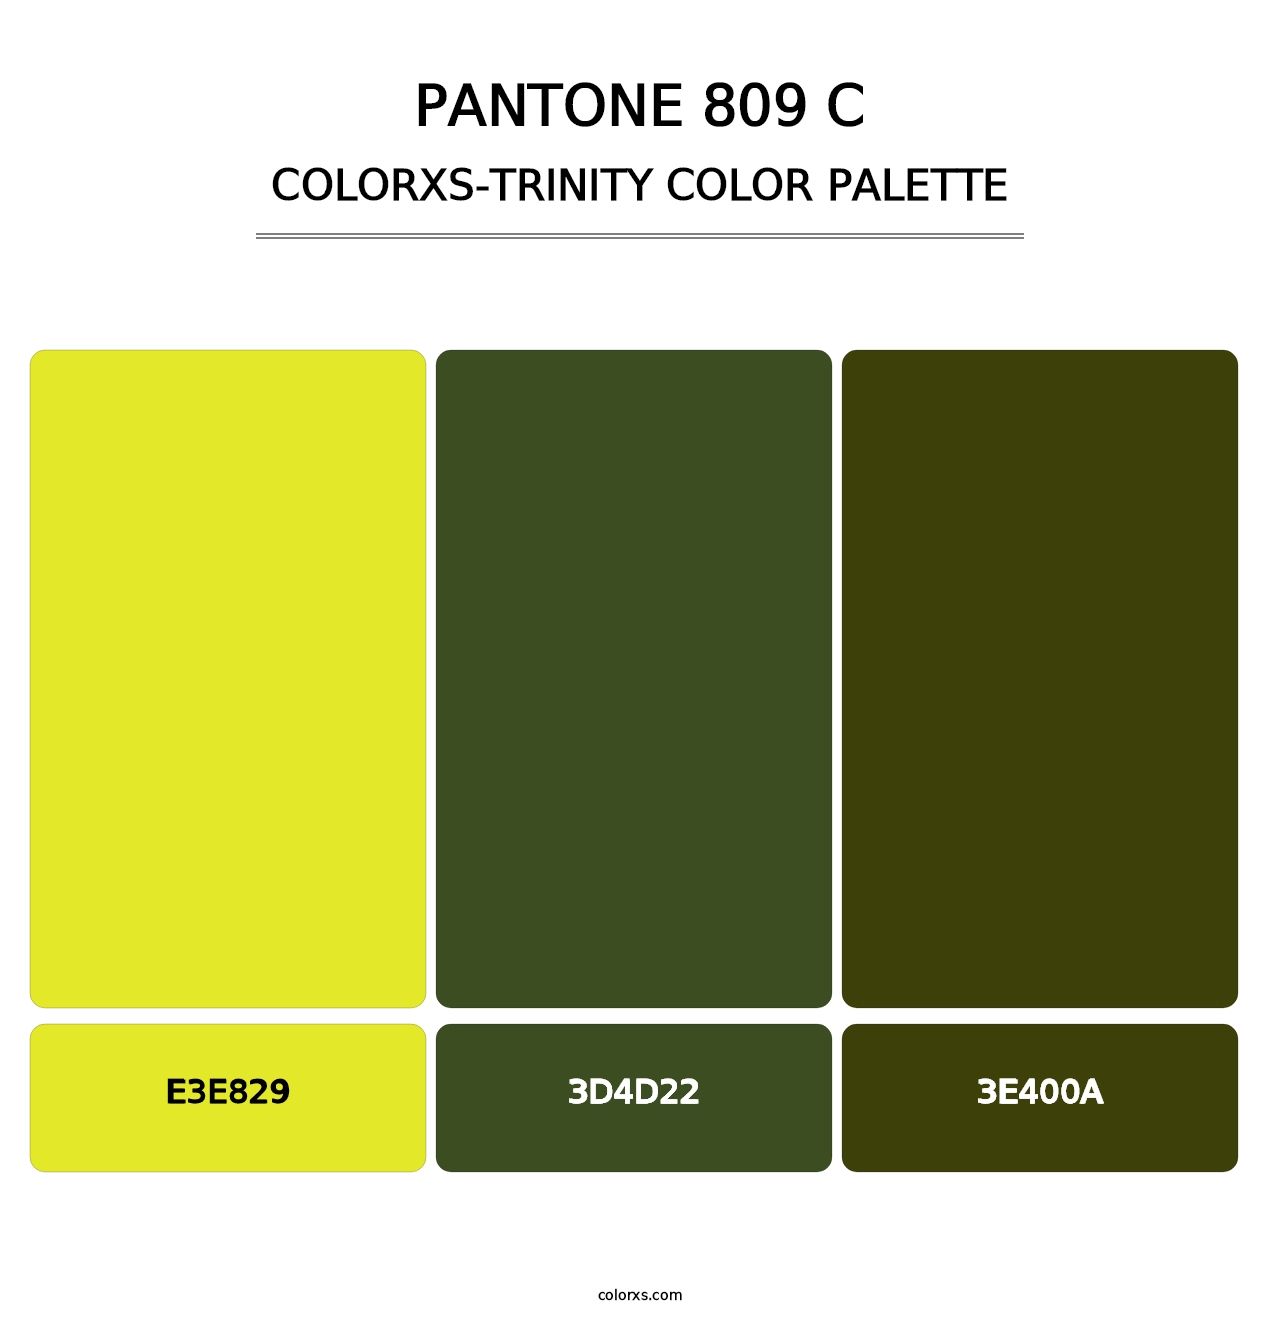 PANTONE 809 C - Colorxs Trinity Palette